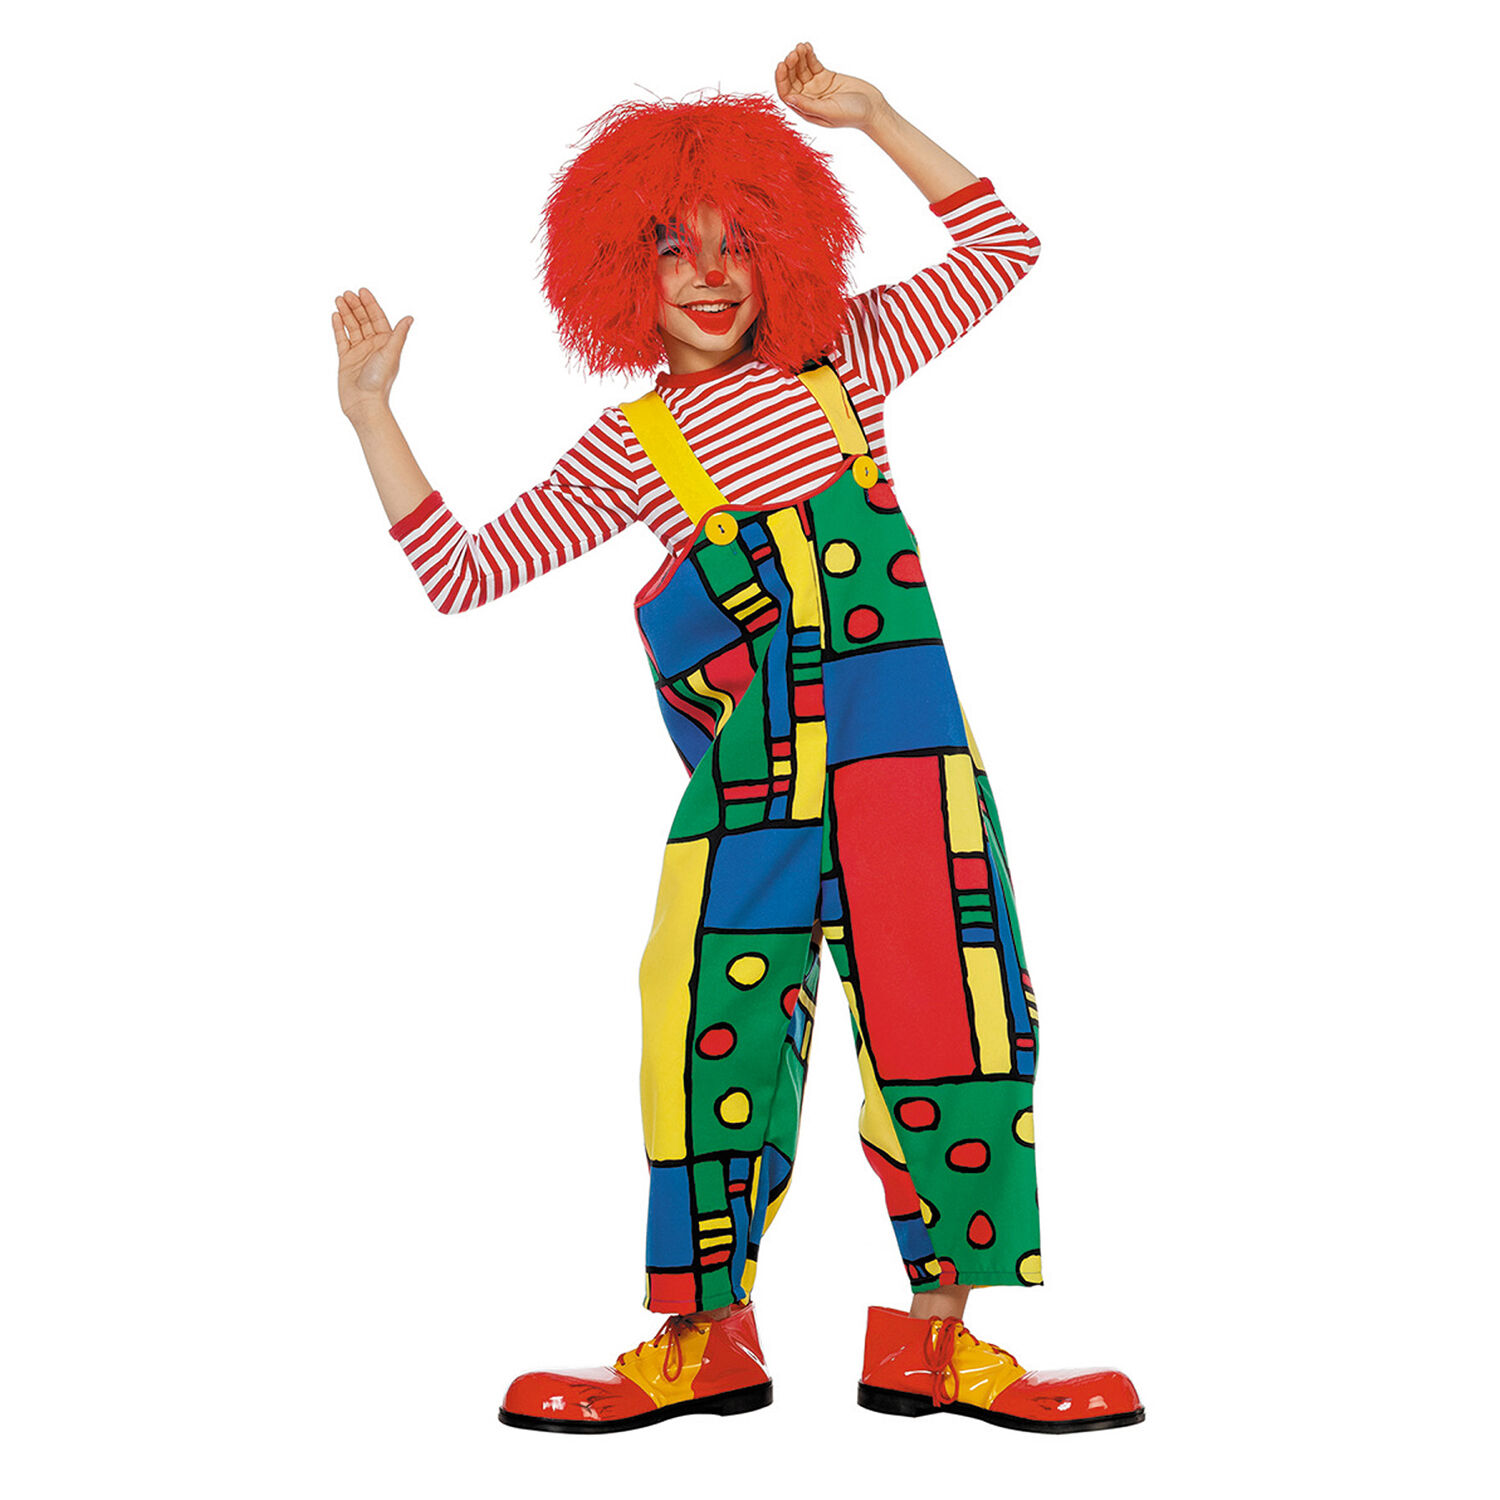 NEU Kinder-Kostüm Clown-Latzhose Mondrian, bunt, Gr. 116